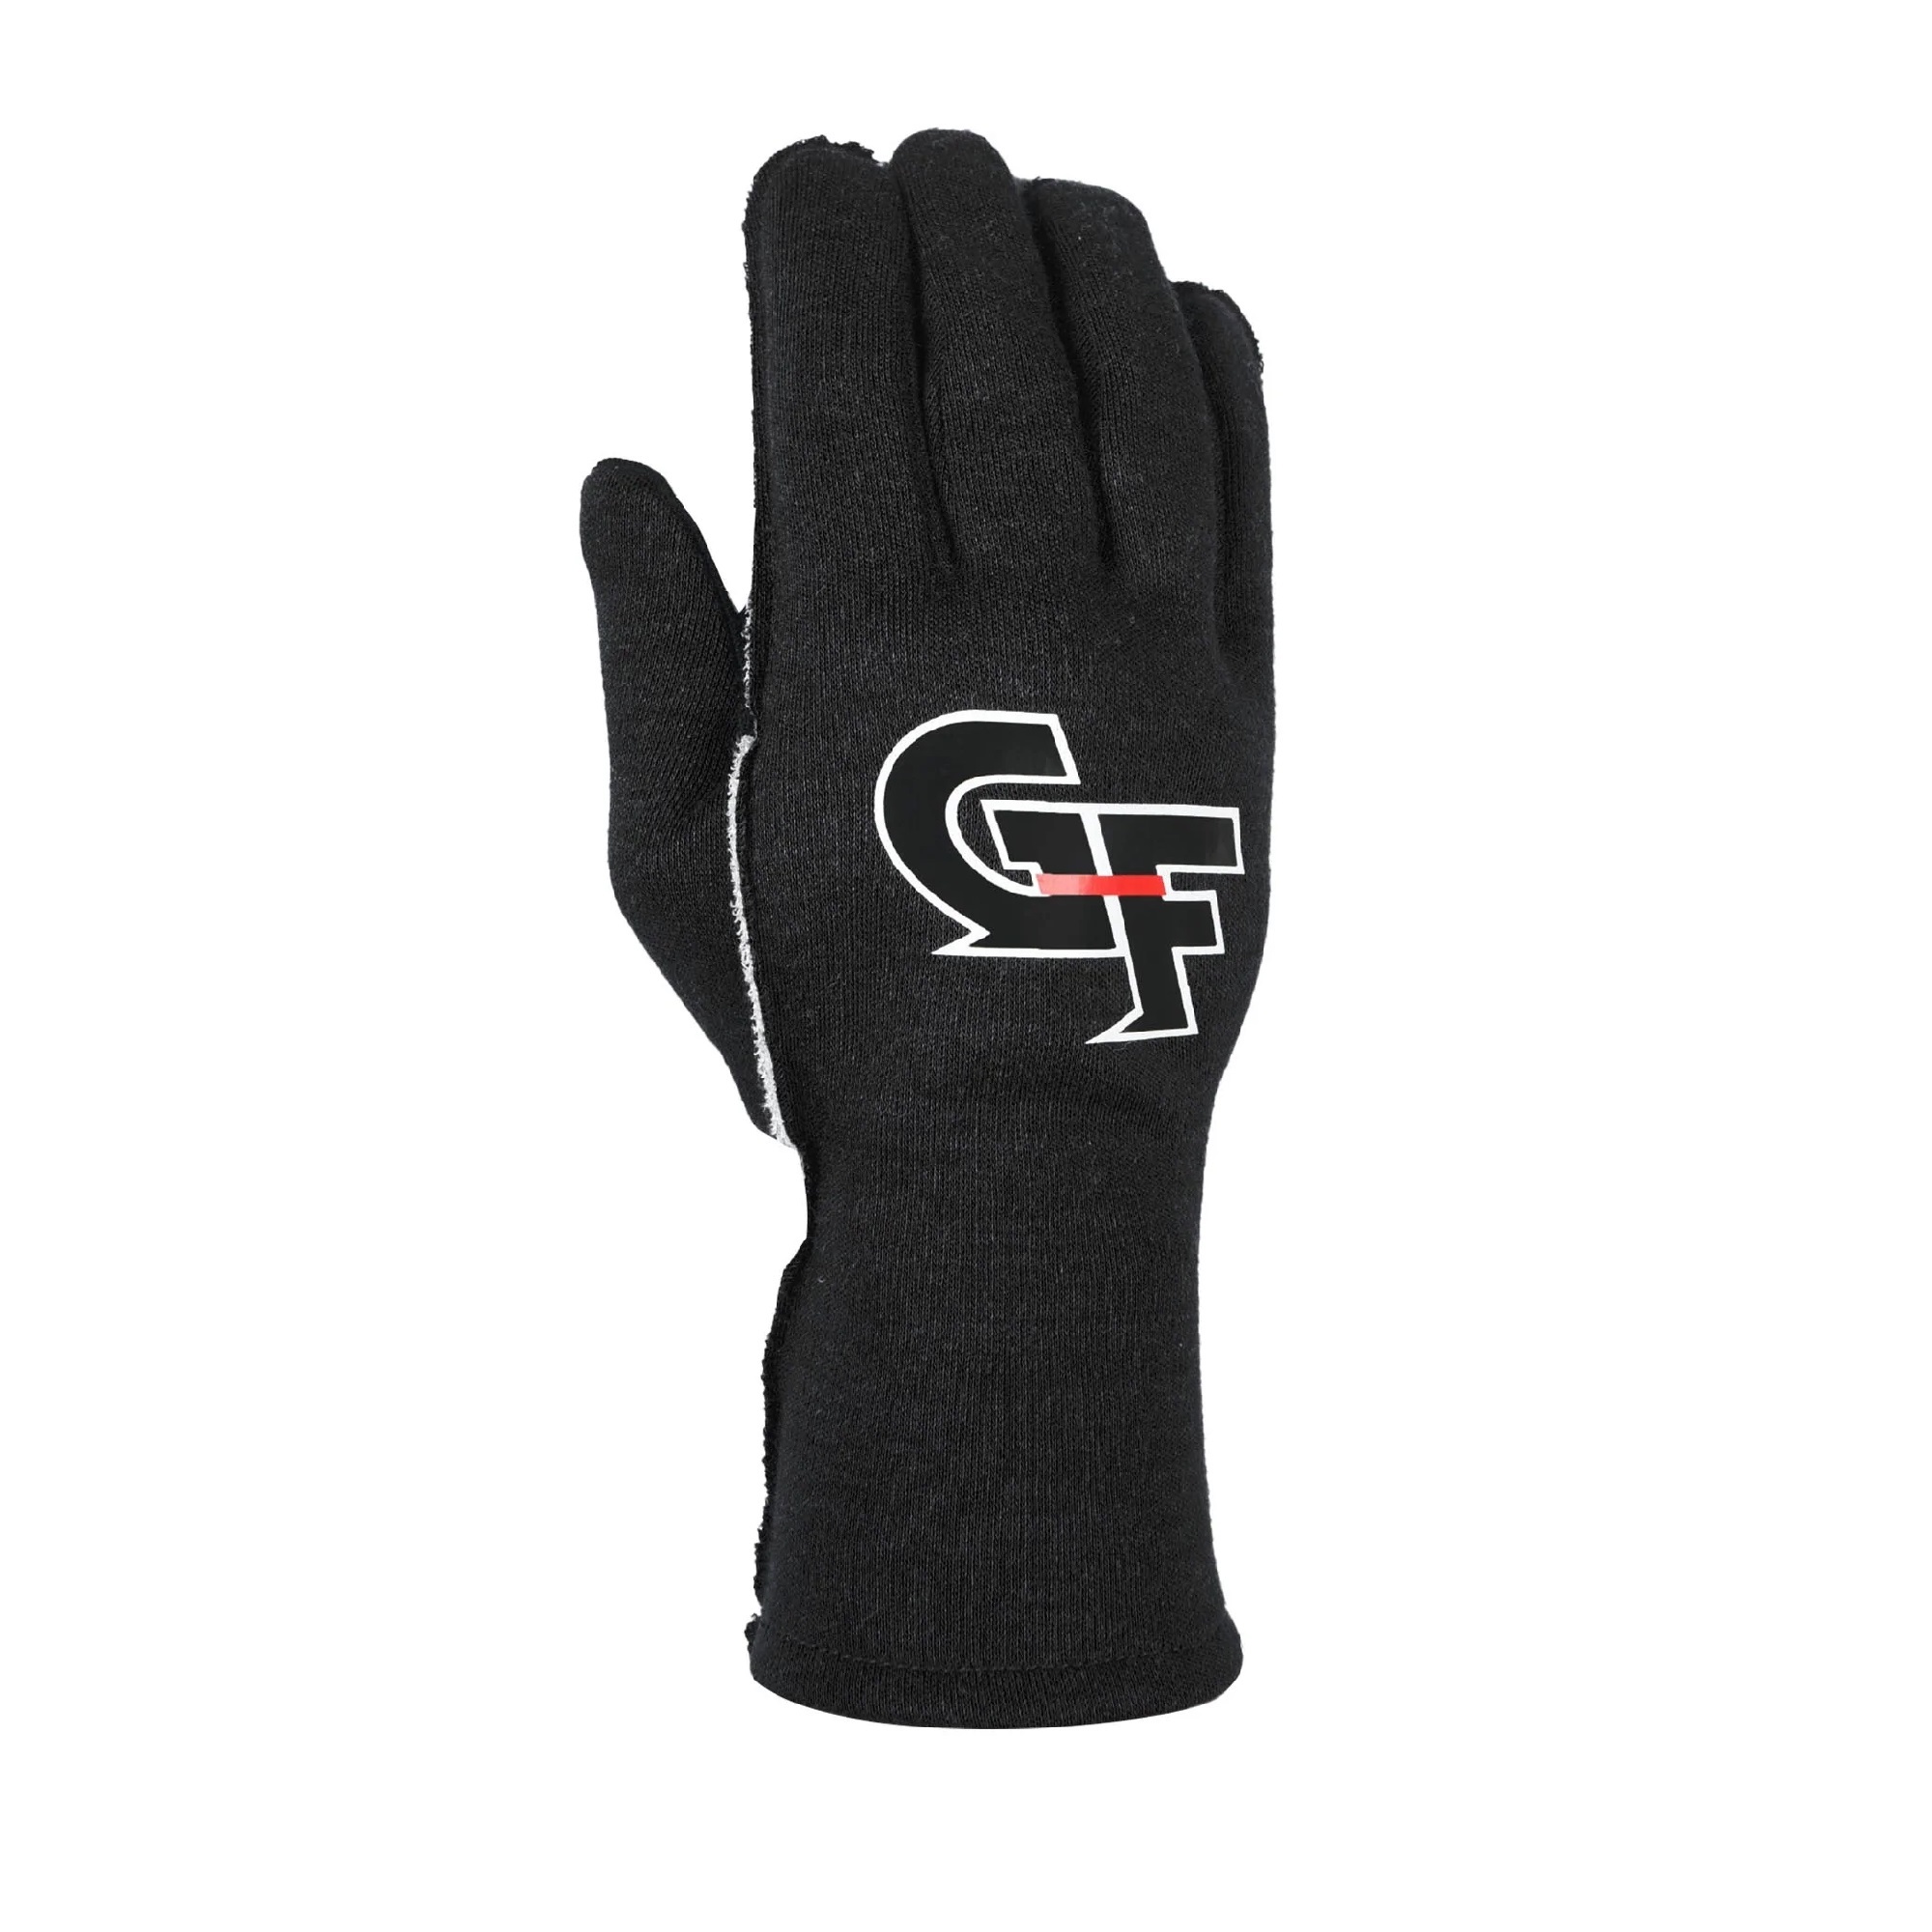 G-FORCE Gloves G-Limit Youth Medium Black